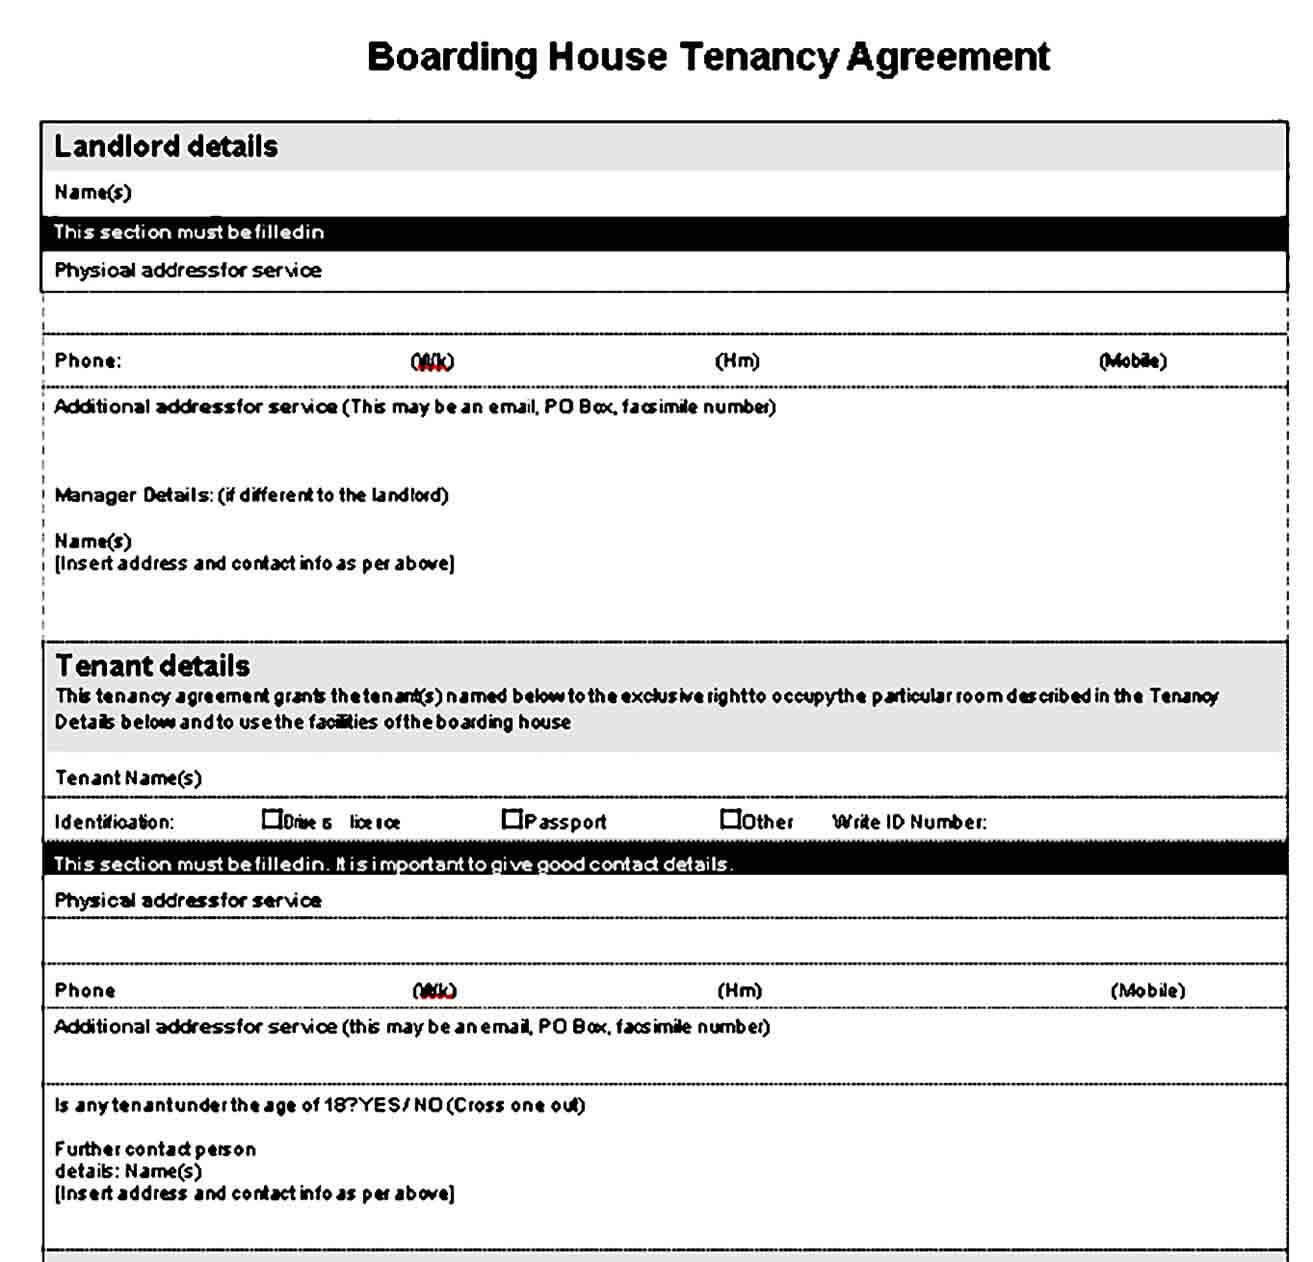 Boarding House Tenancy Agreement Template